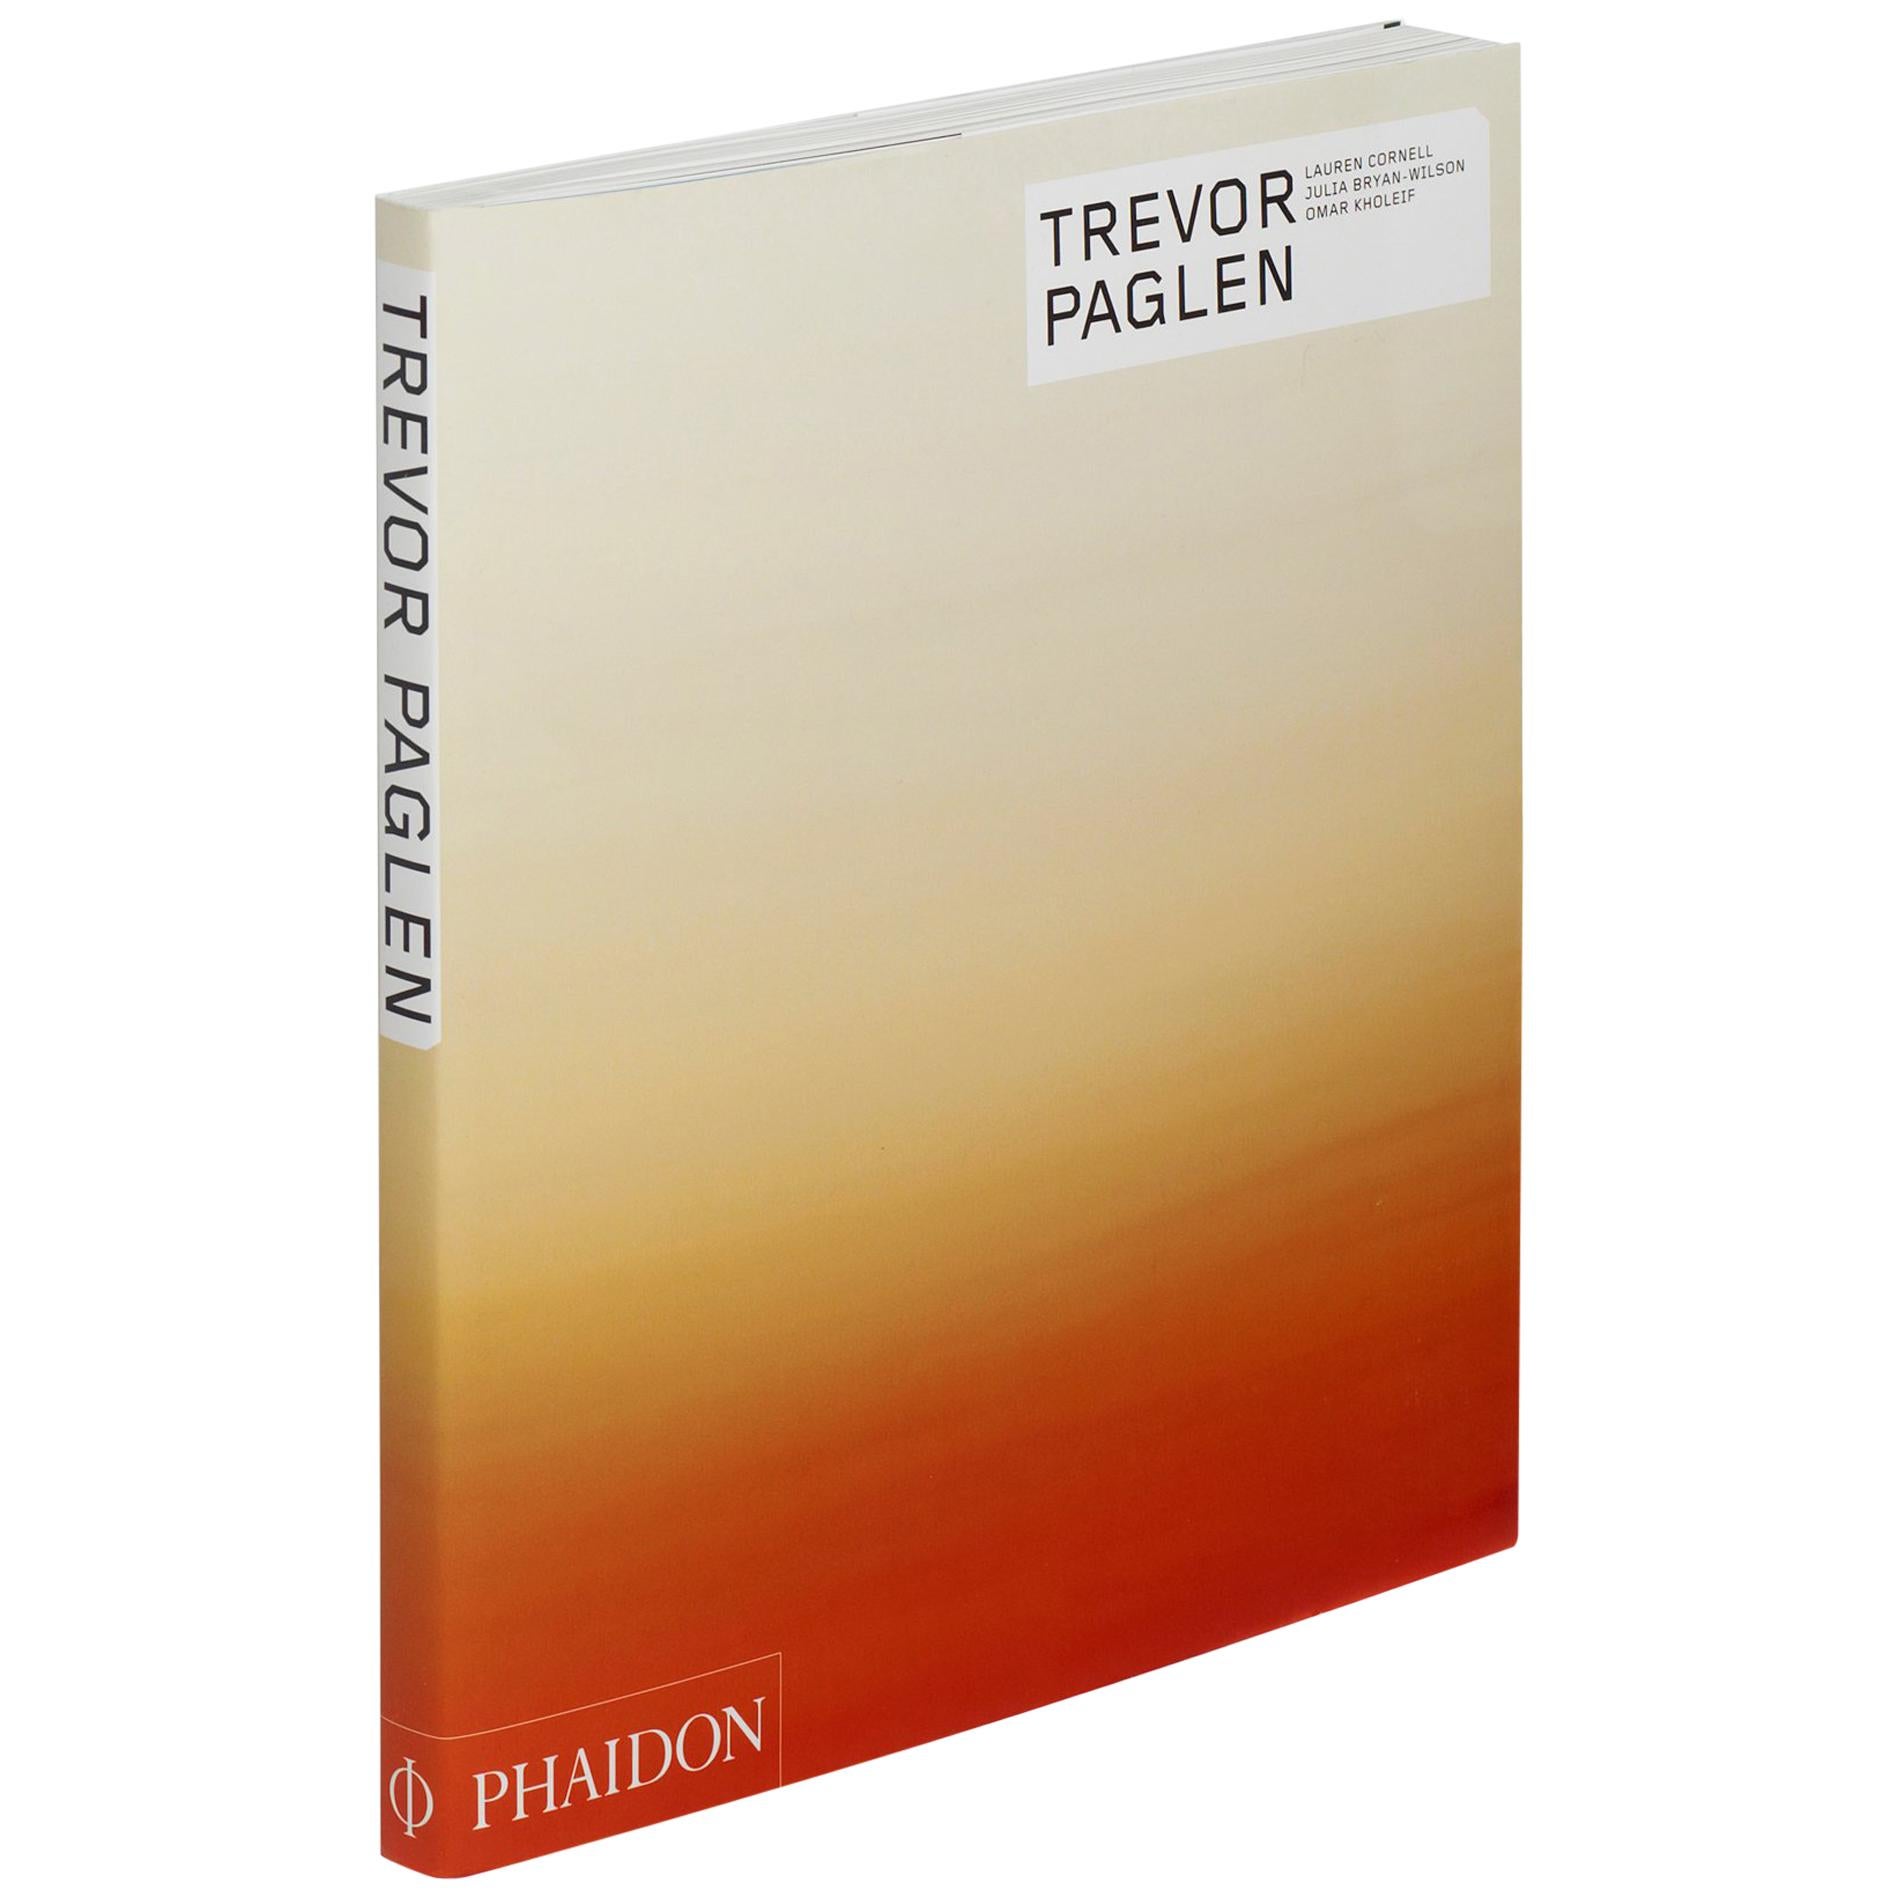 Trevor Paglen Phaidon Contemporary Artists Series Monograph